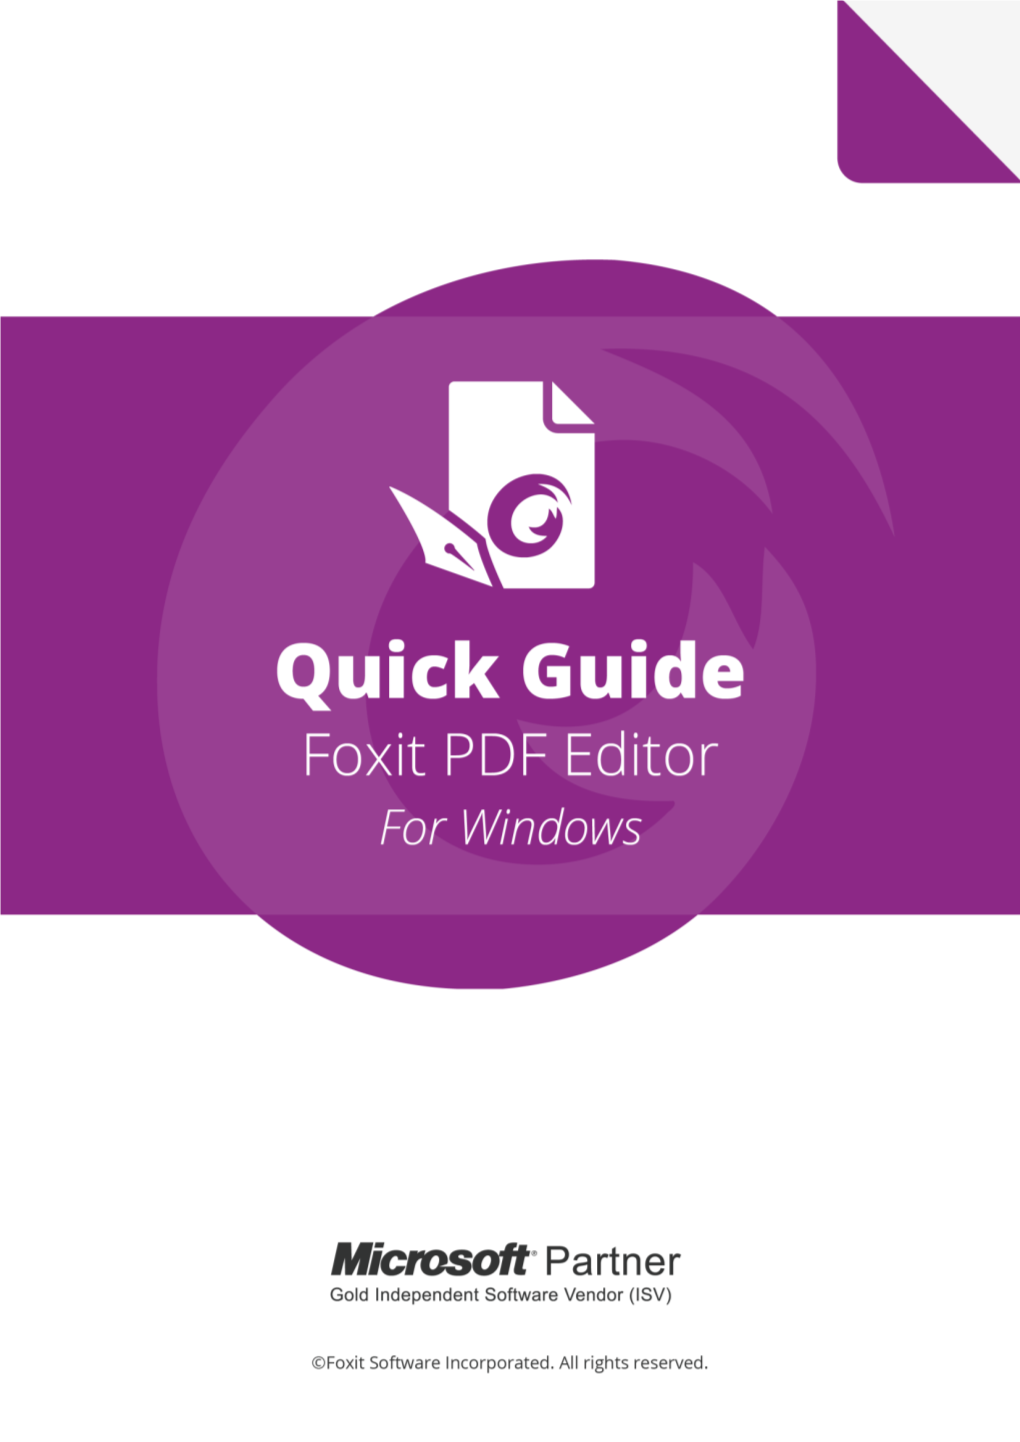 Foxit PDF Editor Quick Guide11.0